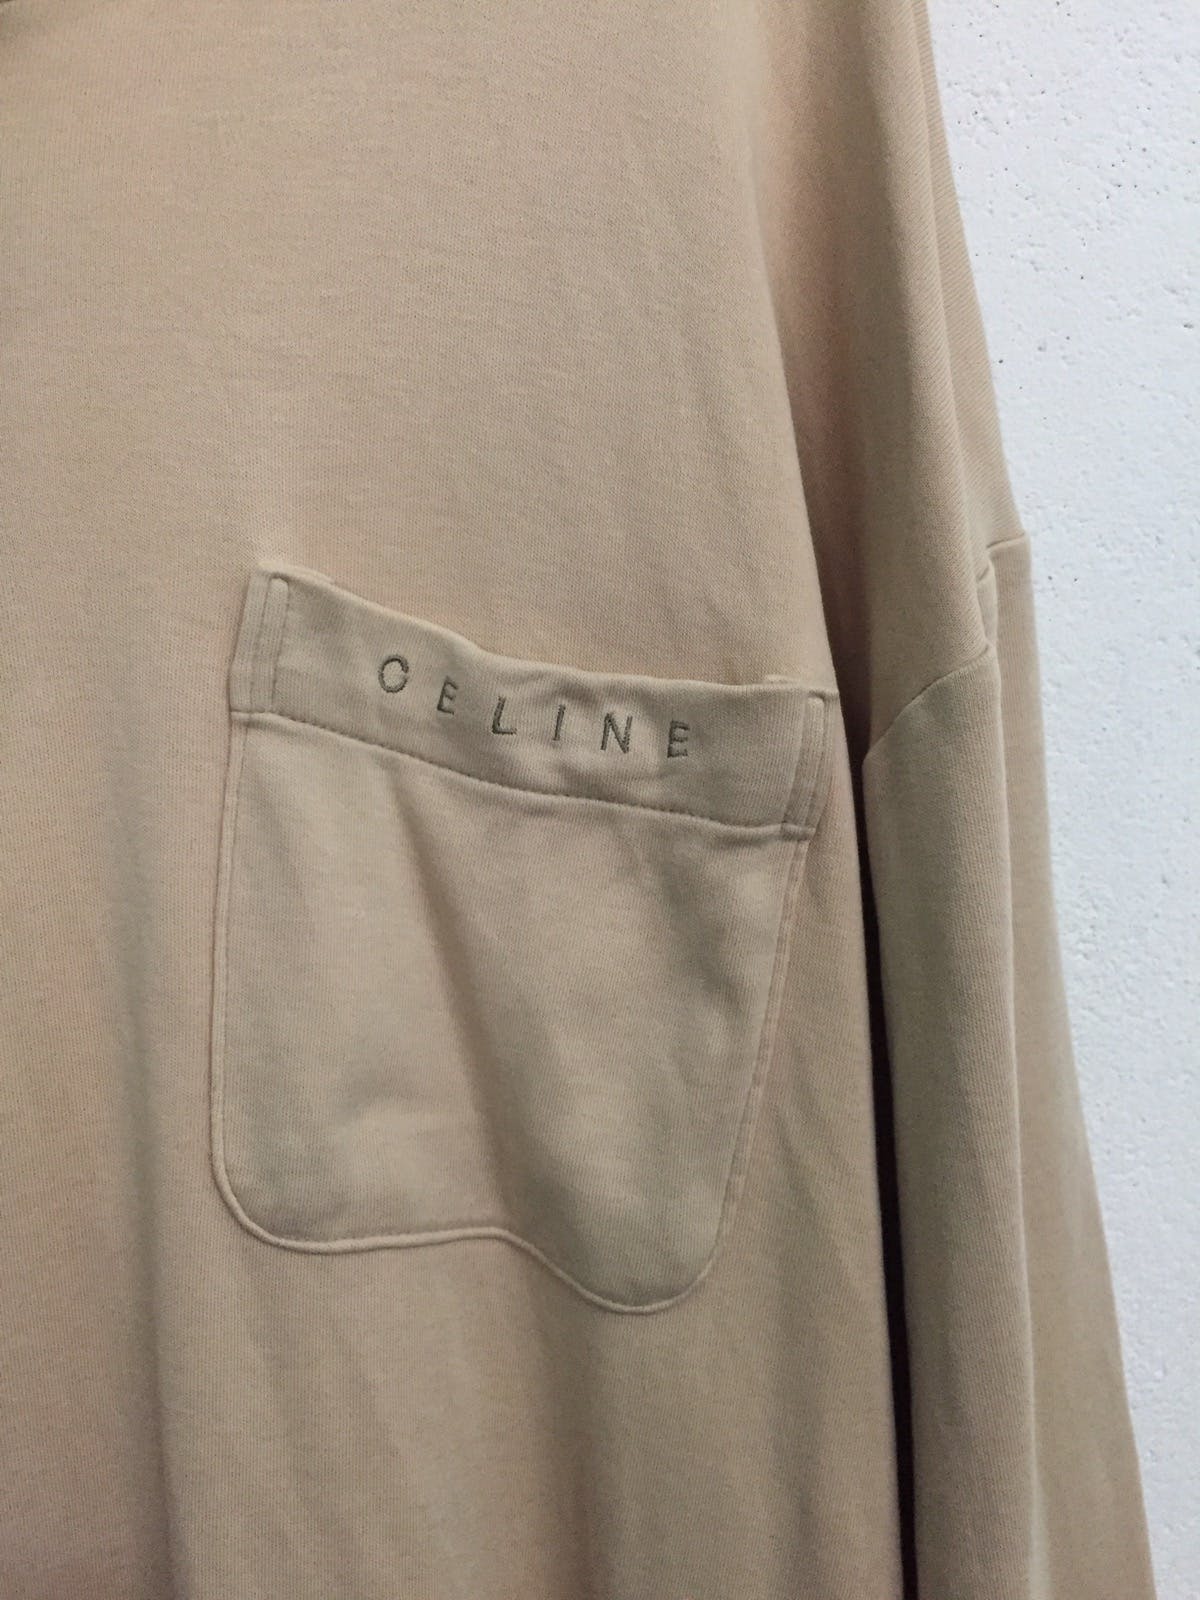 Faded CELINE Button Sweatshirt/Long Sleeve Shirt - 6